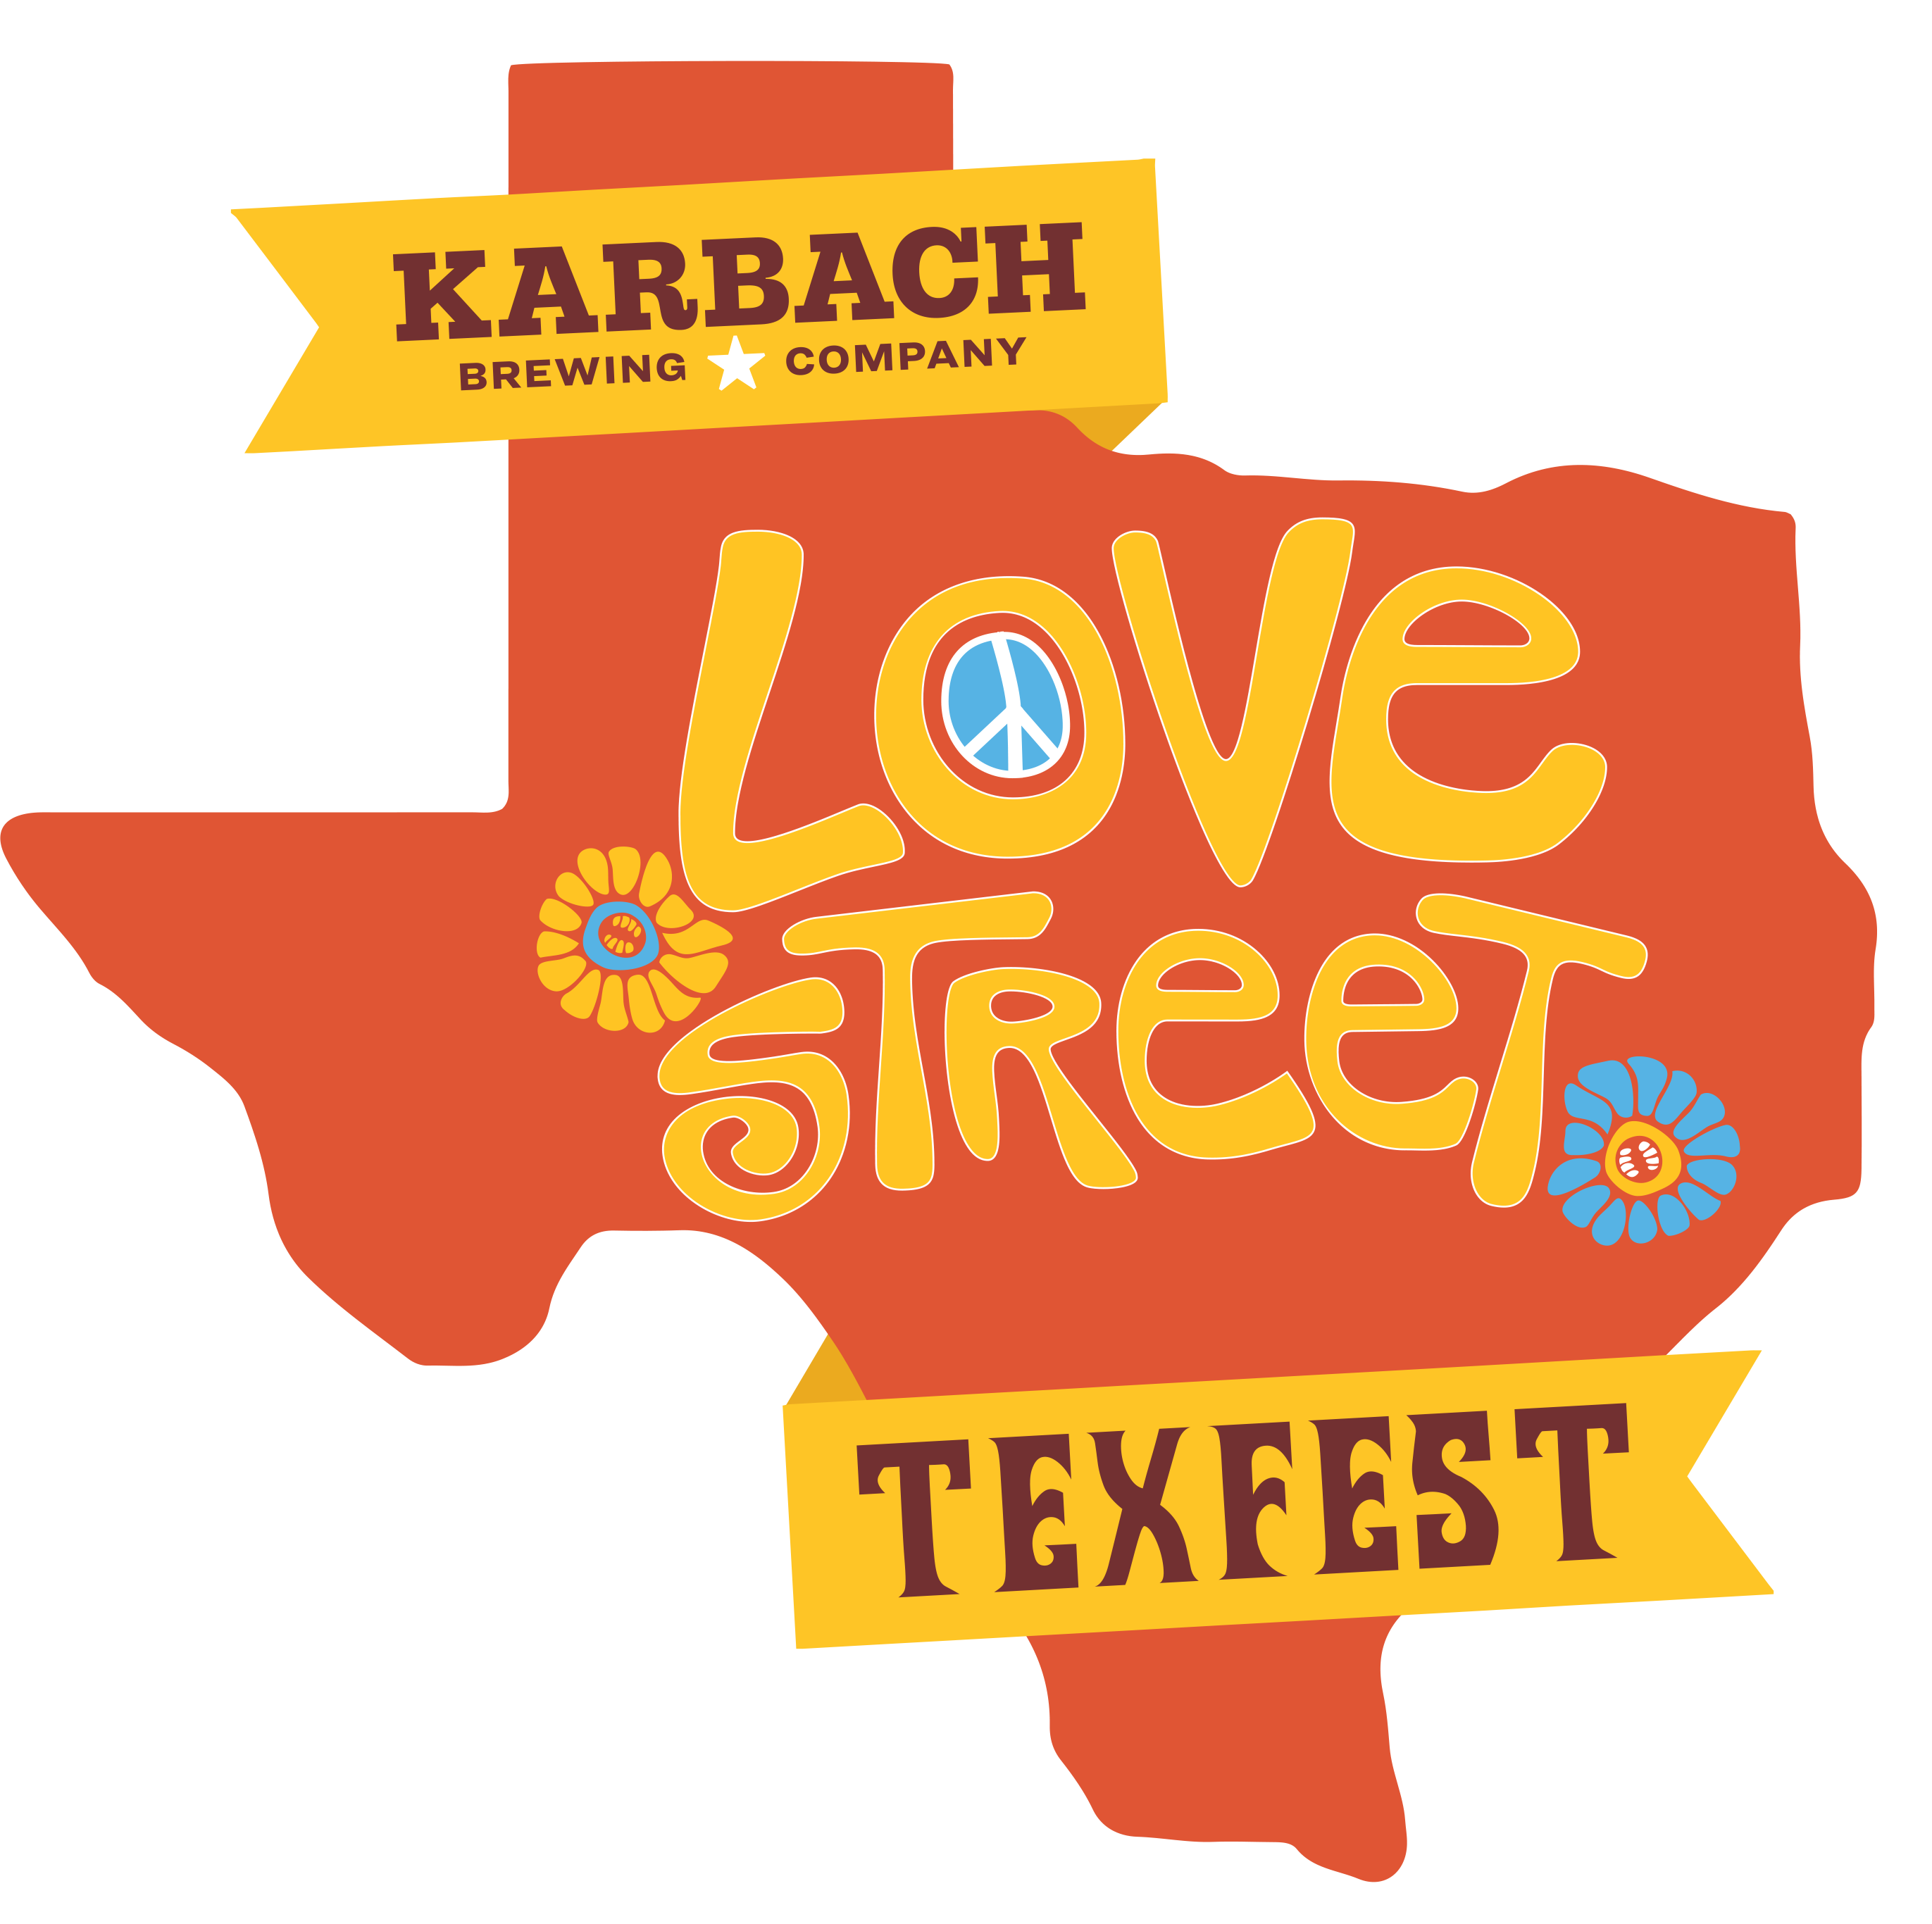 Karbach Love Street TexFest